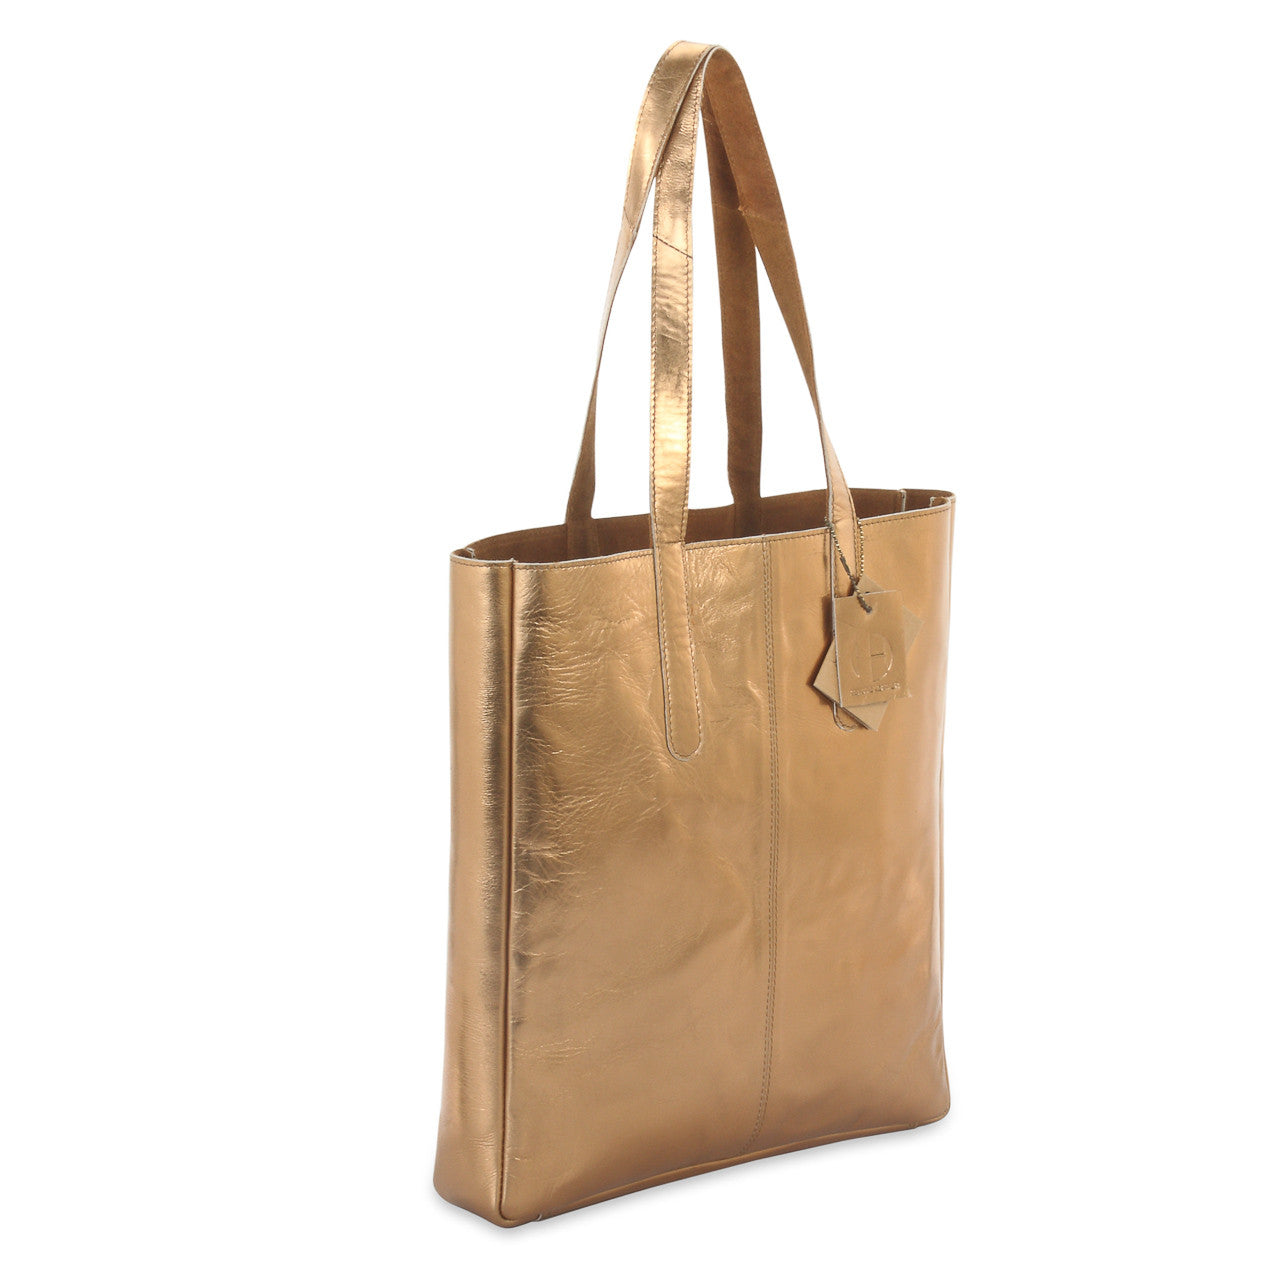 Hydestyle Metallic Sofia reversible leather tote bag #LB32 copper